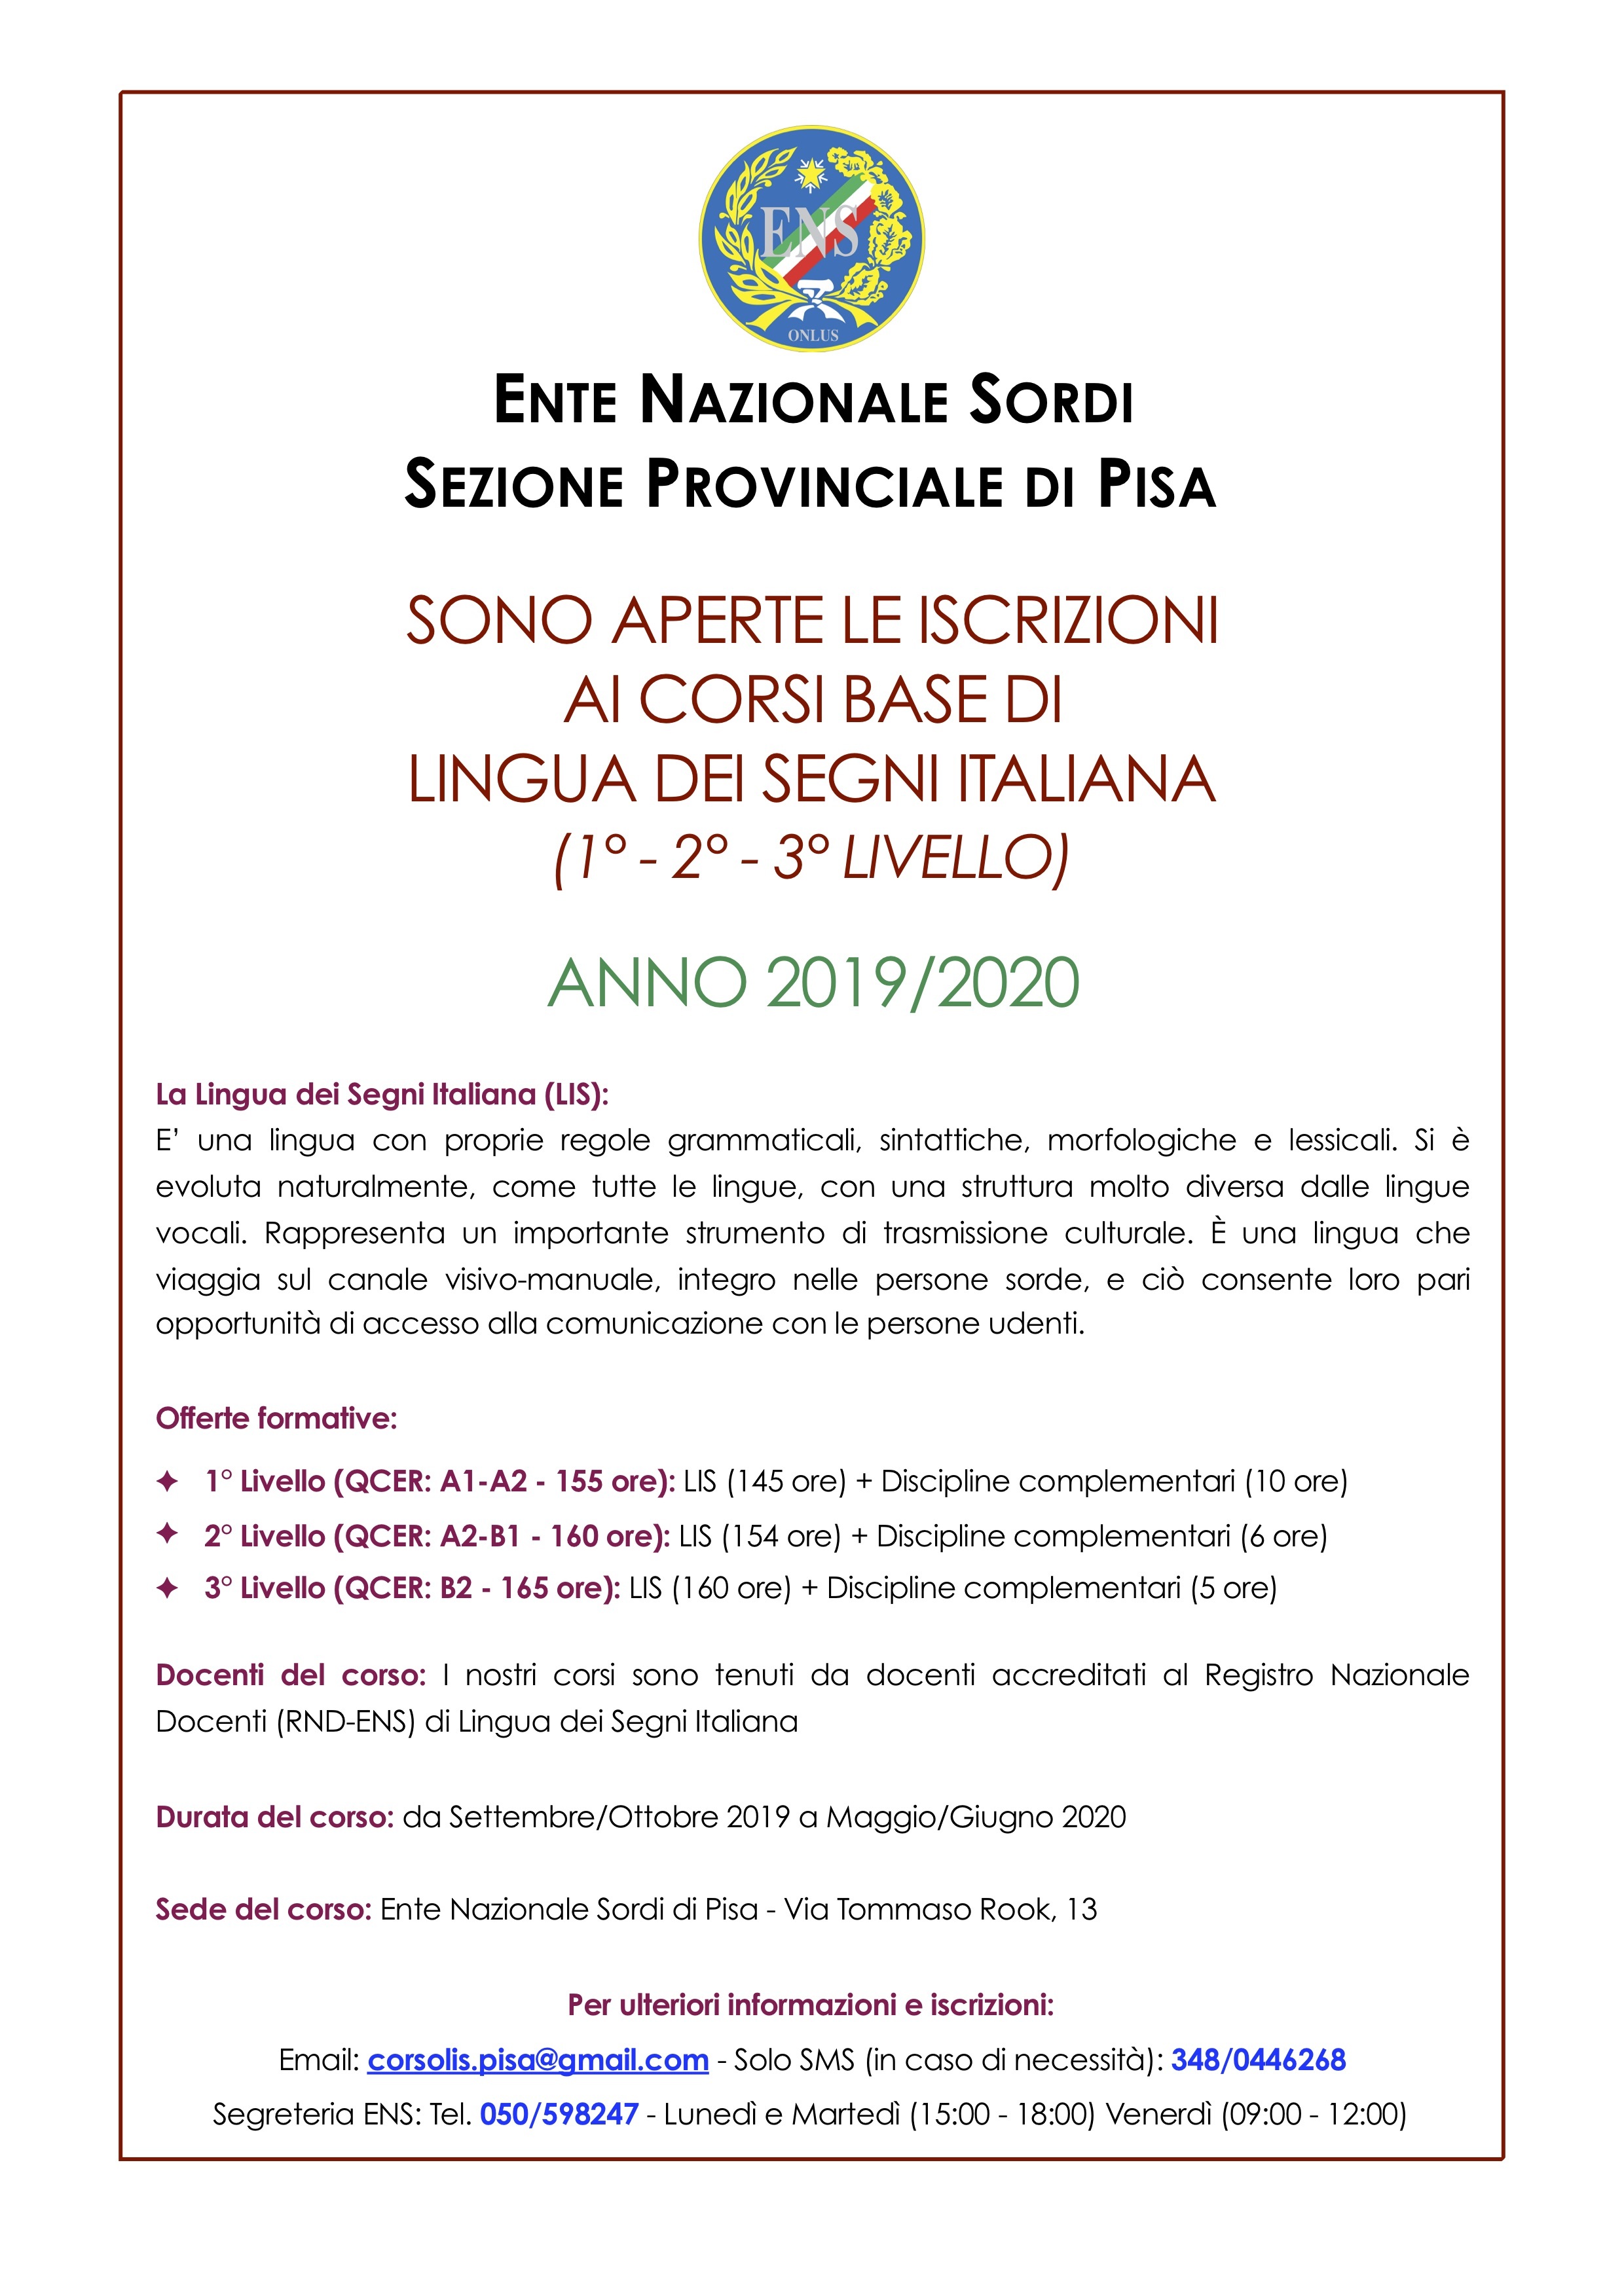 ENS di Pisa Locandina 2019 2020 1 2 3 Livello.pages